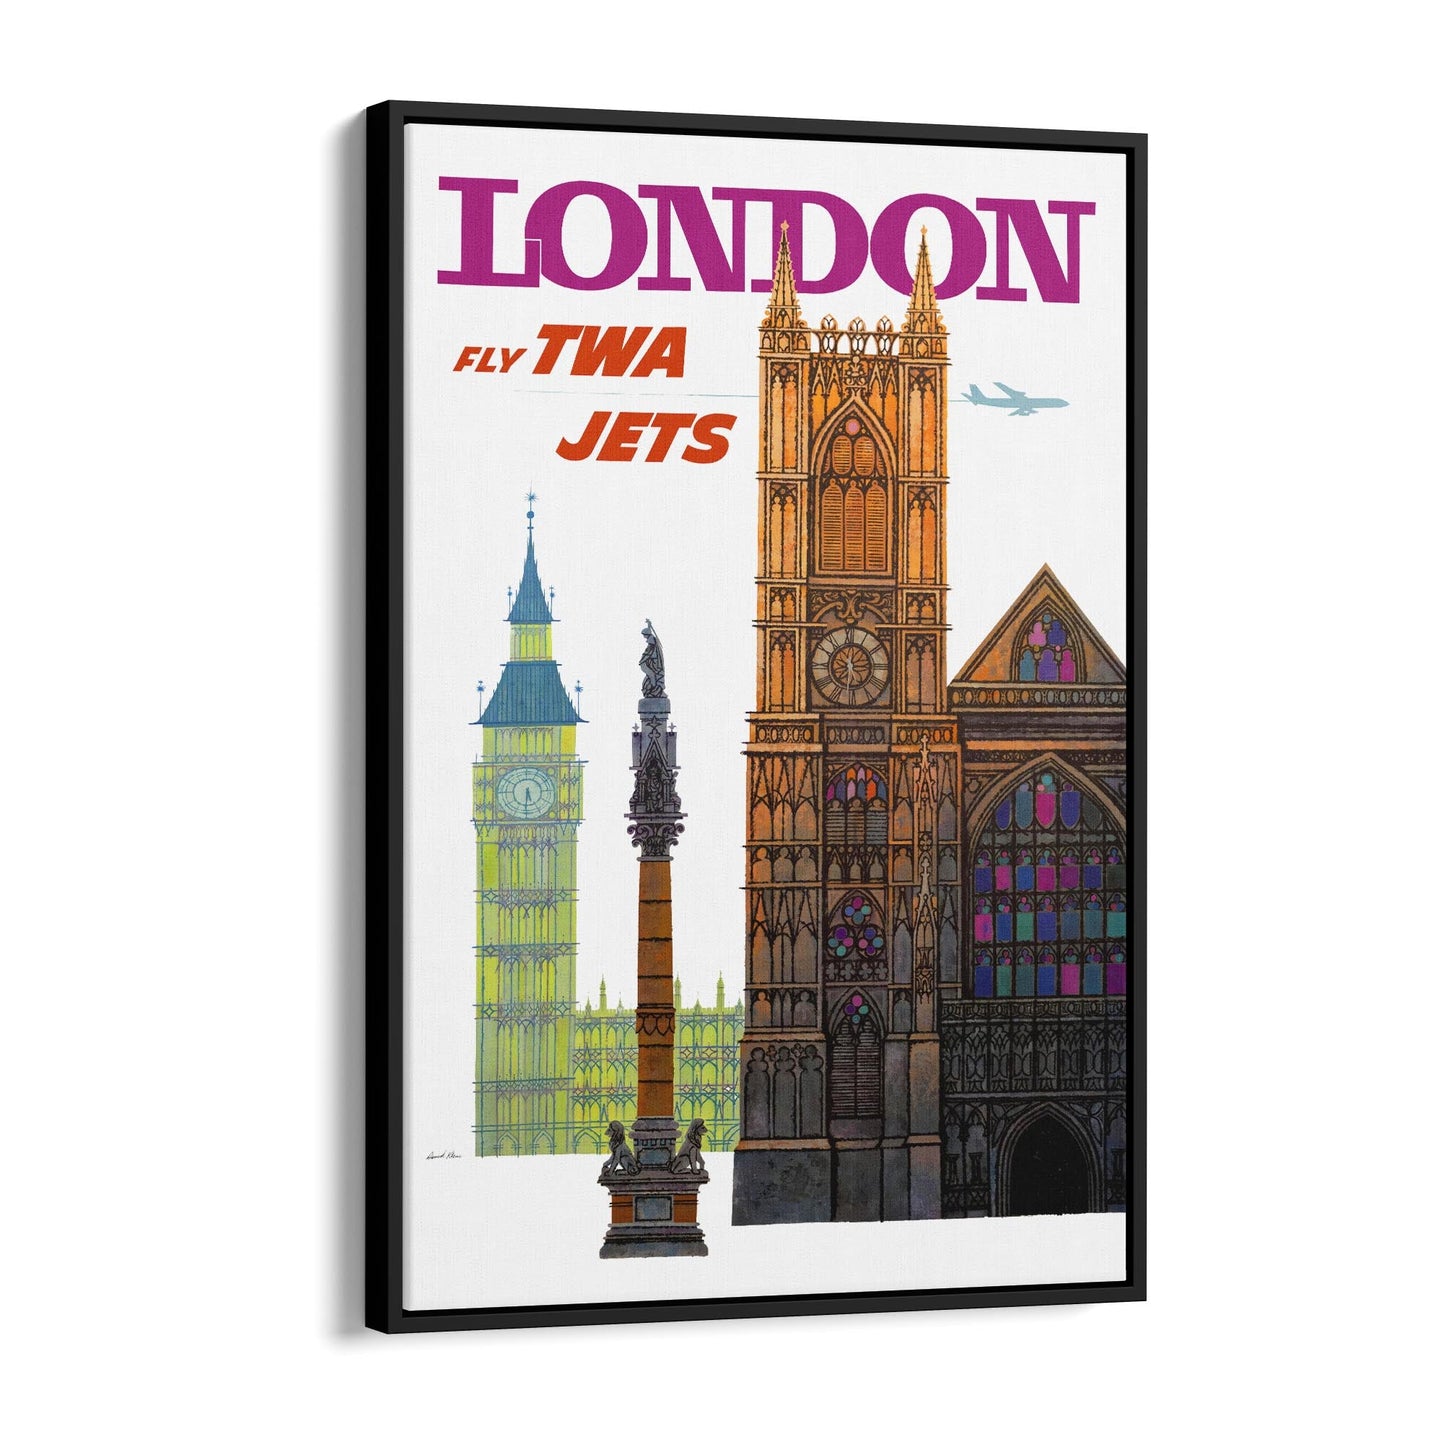 London Landmarks "Fly TWA Jets" by David Klein | Framed Canvas Vintage Travel Advertisement